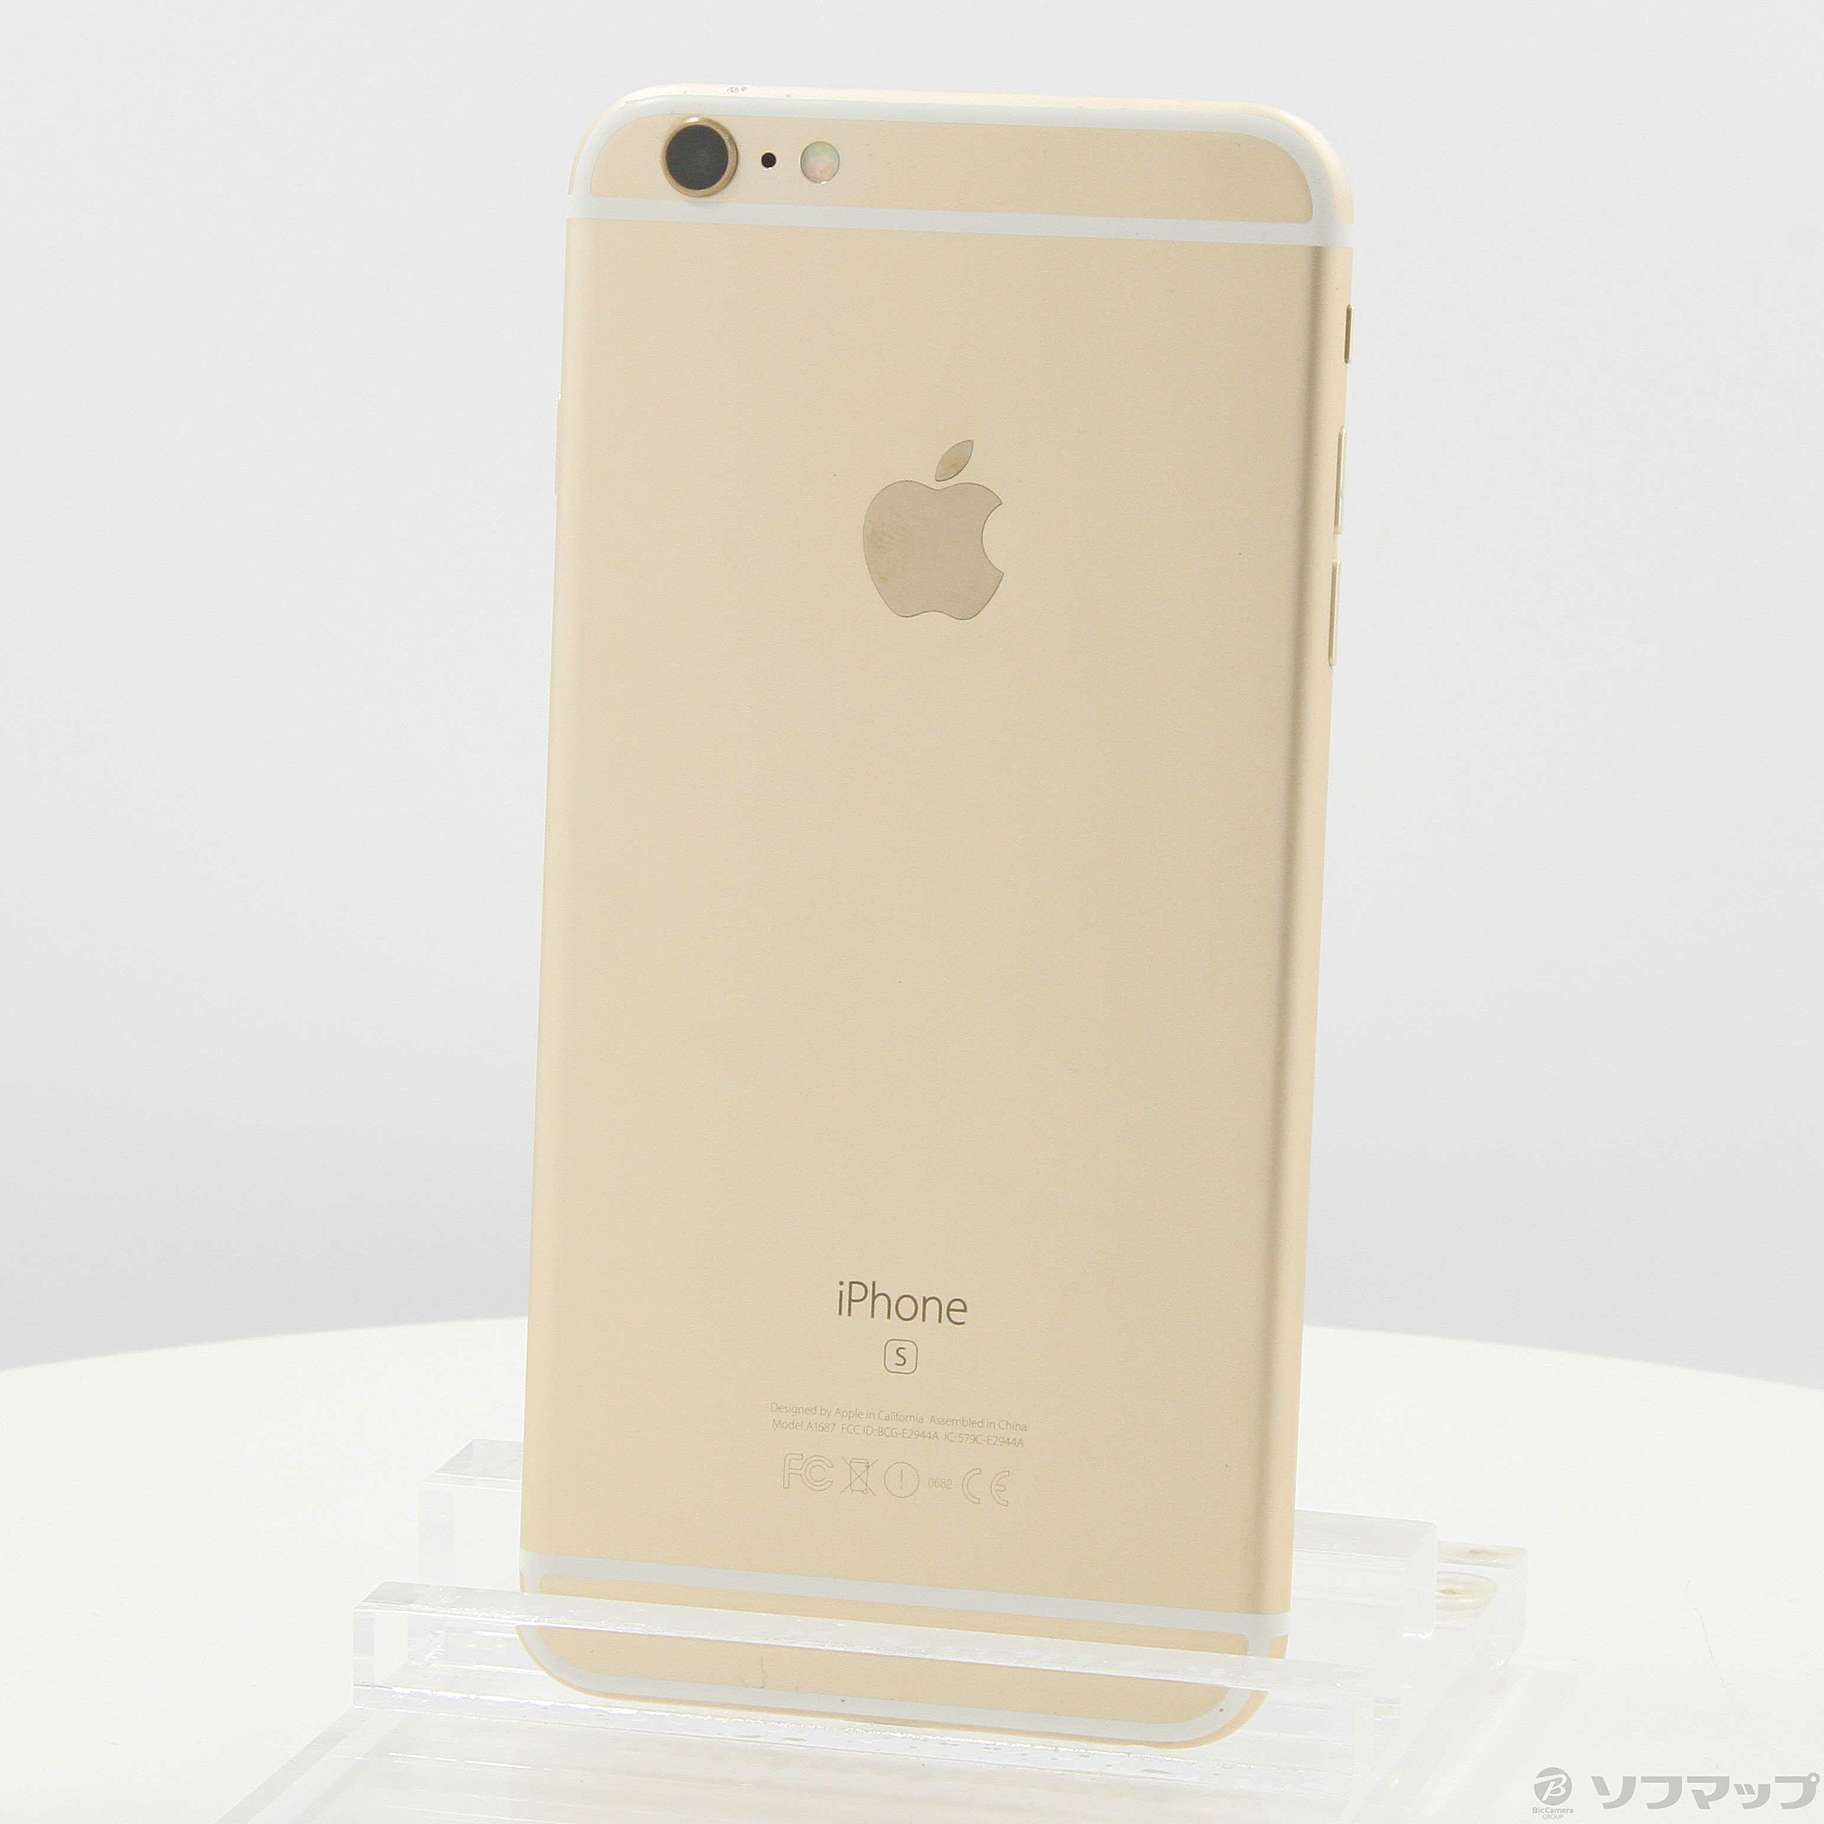 iPhone 6s Plus gold 128gb simフリー版 ゴールドスマートフォン本体 